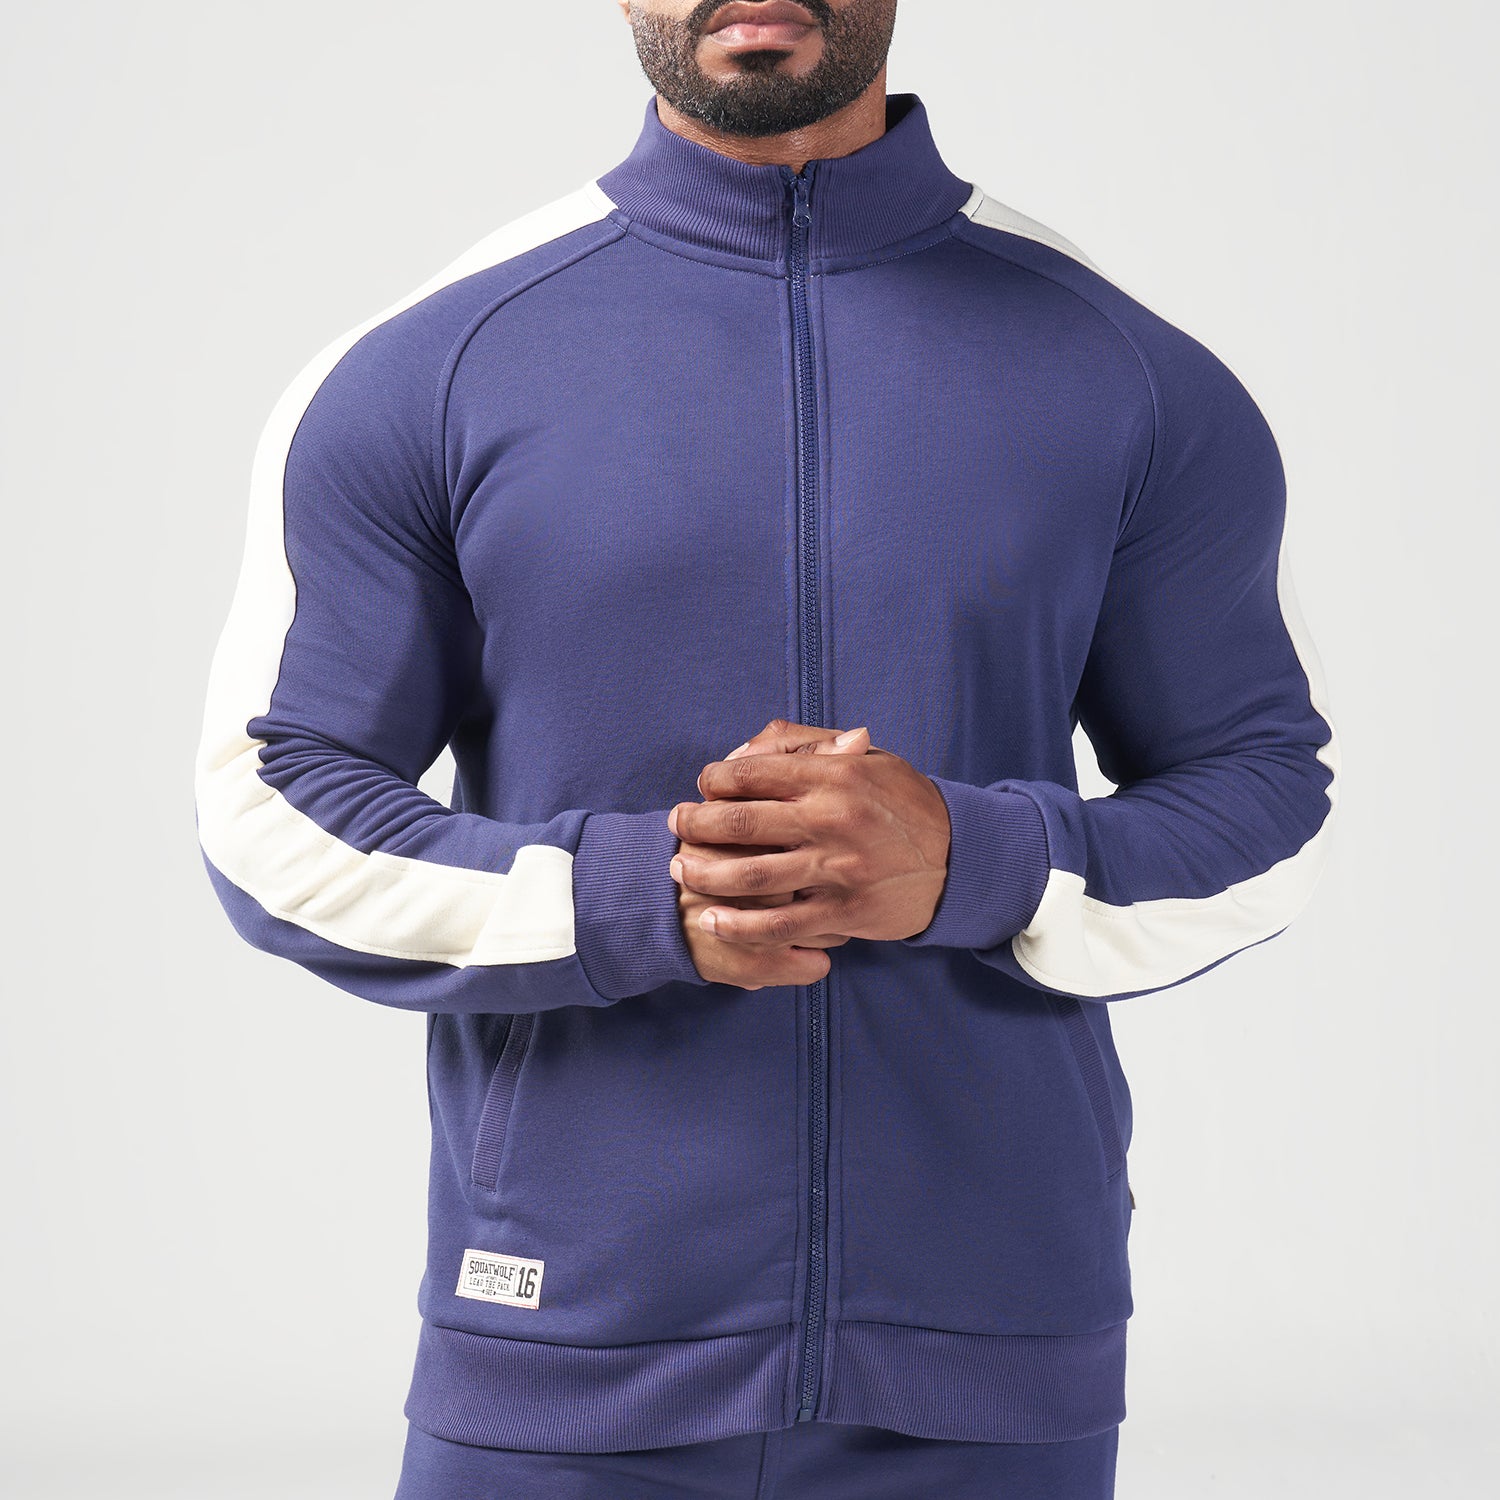 squatwolf-gym-wear-golden-era-retro-jacket-patriot-blue-workout-hoodies-for-men